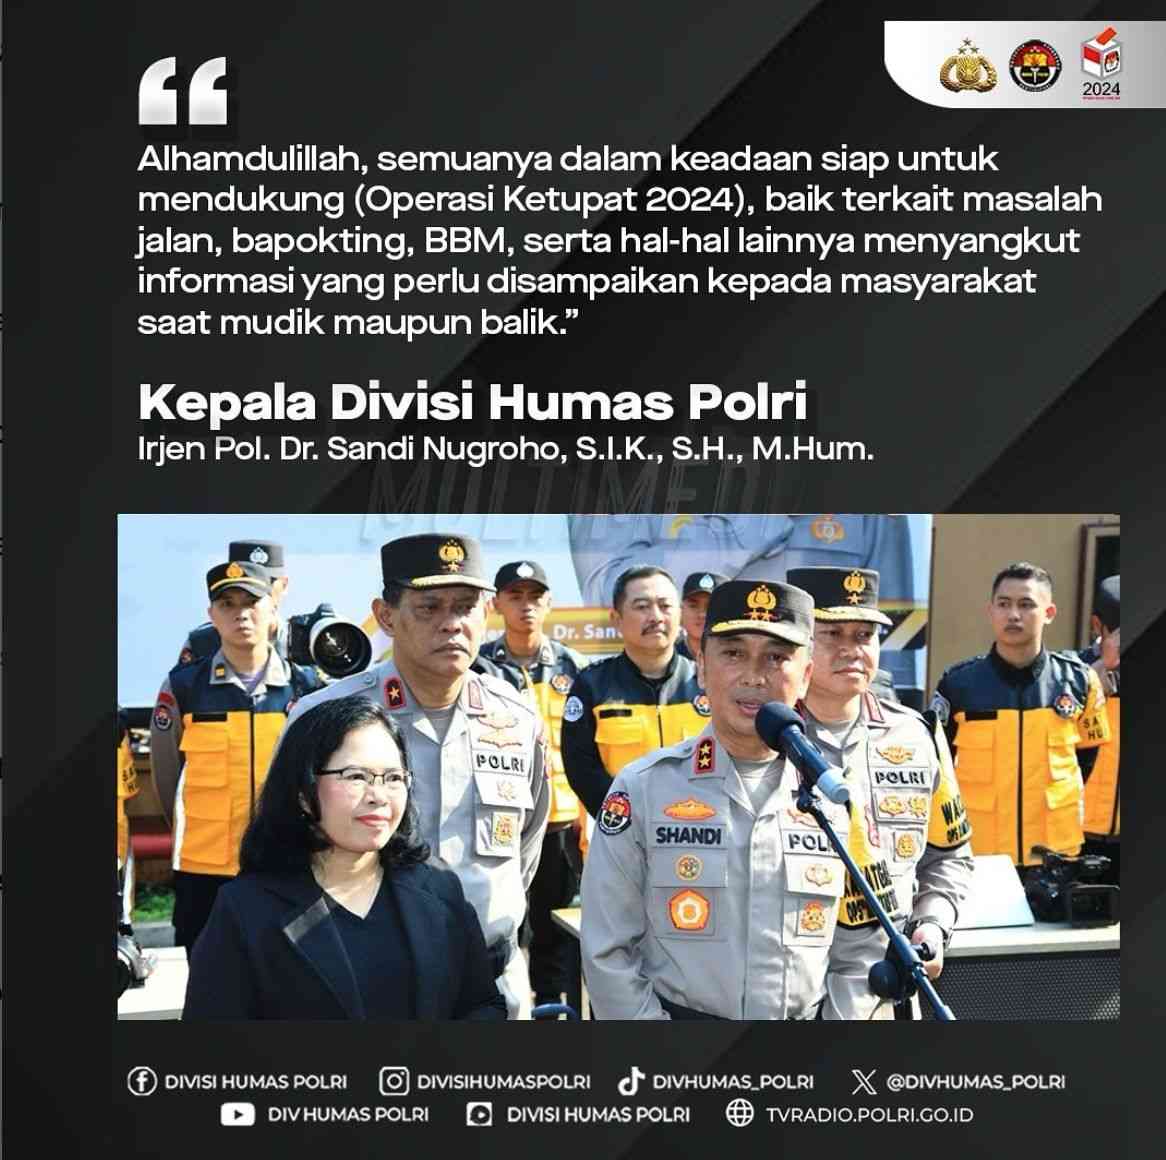 Div Humas Polri Siap Maksimalkan Operasi Ketupat 2024 Demi Keamanan Mudik pada Awal Idul Fitri